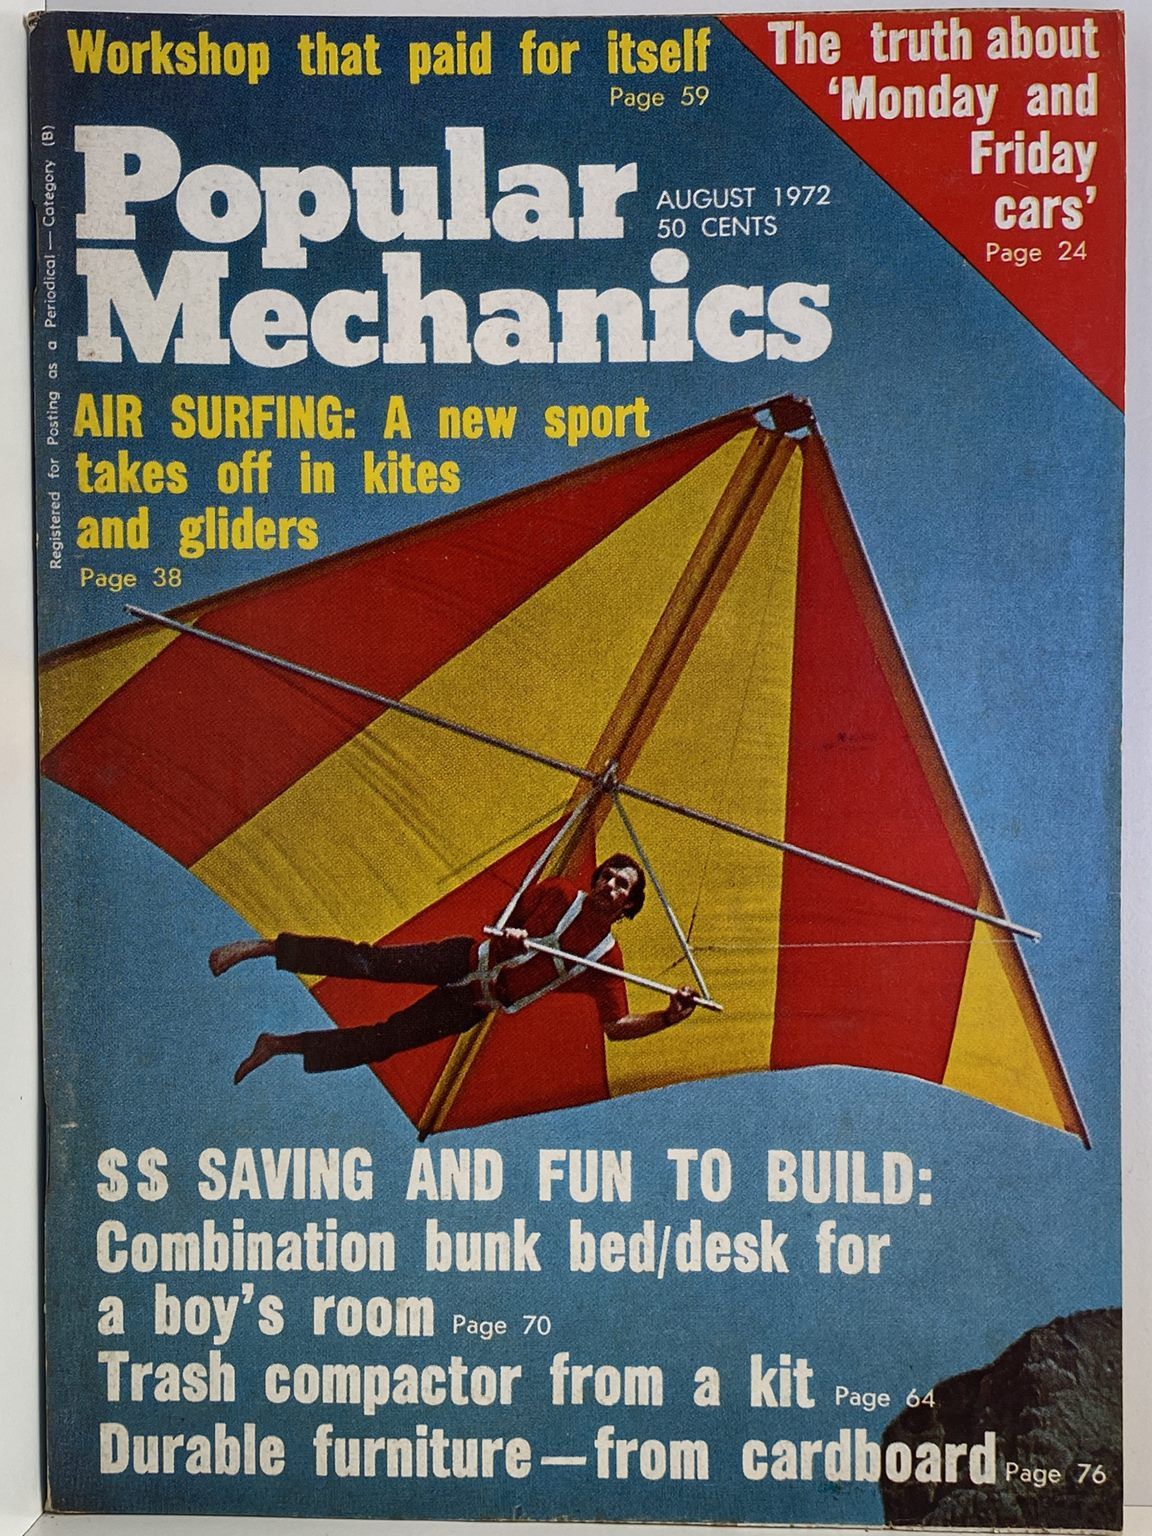 VINTAGE MAGAZINE: Popular Mechanics - Vol. 137, No. 6 - August 1972